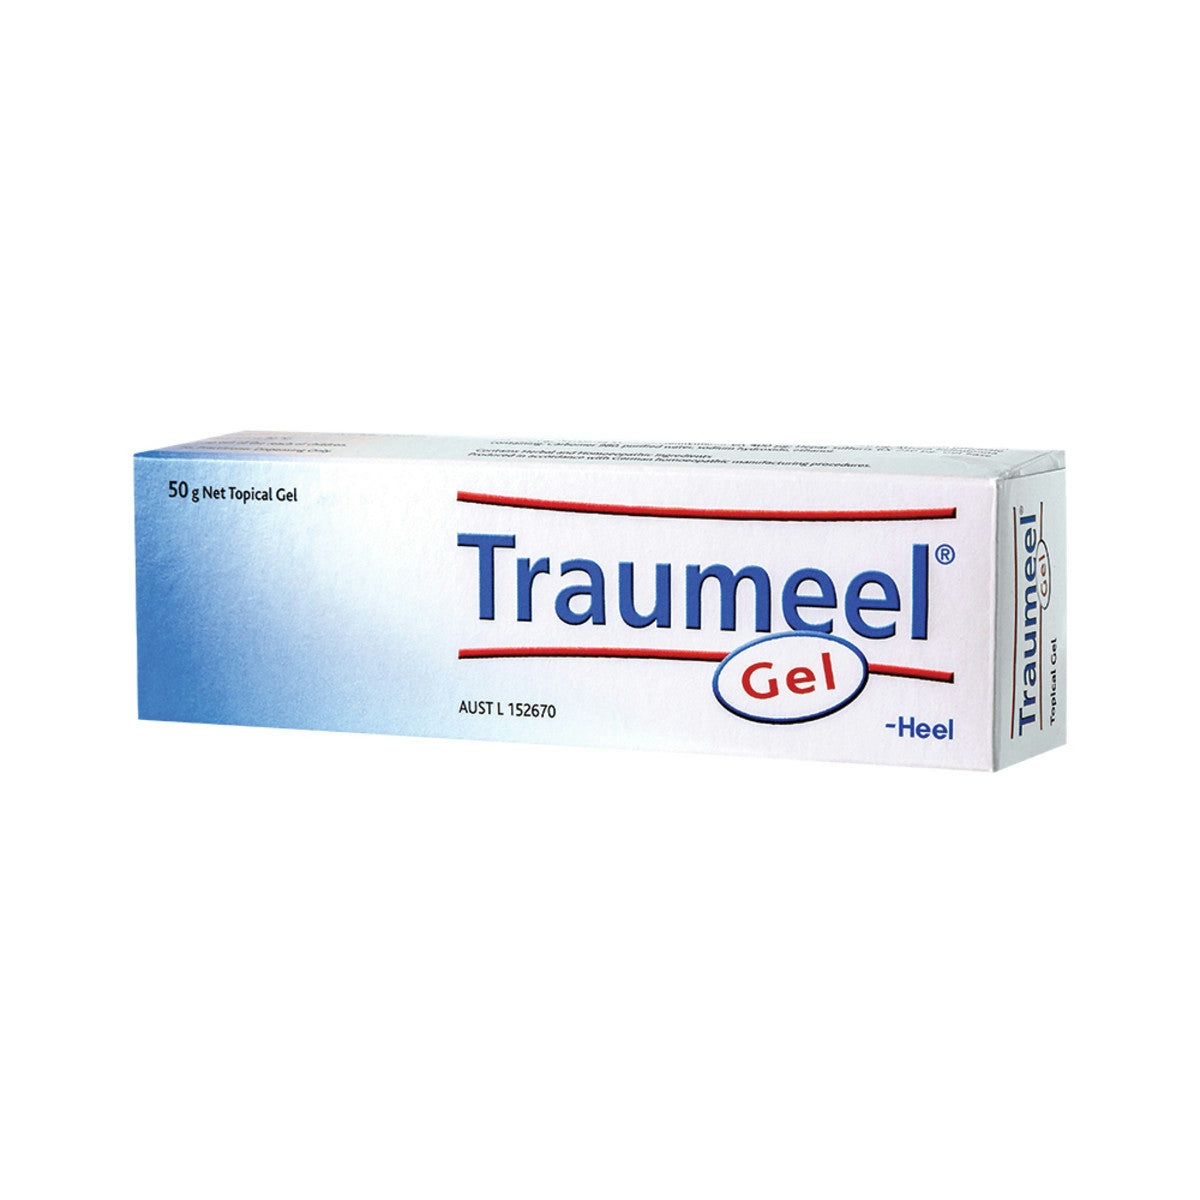 image of Heel Traumeel Gel 50g on white background 